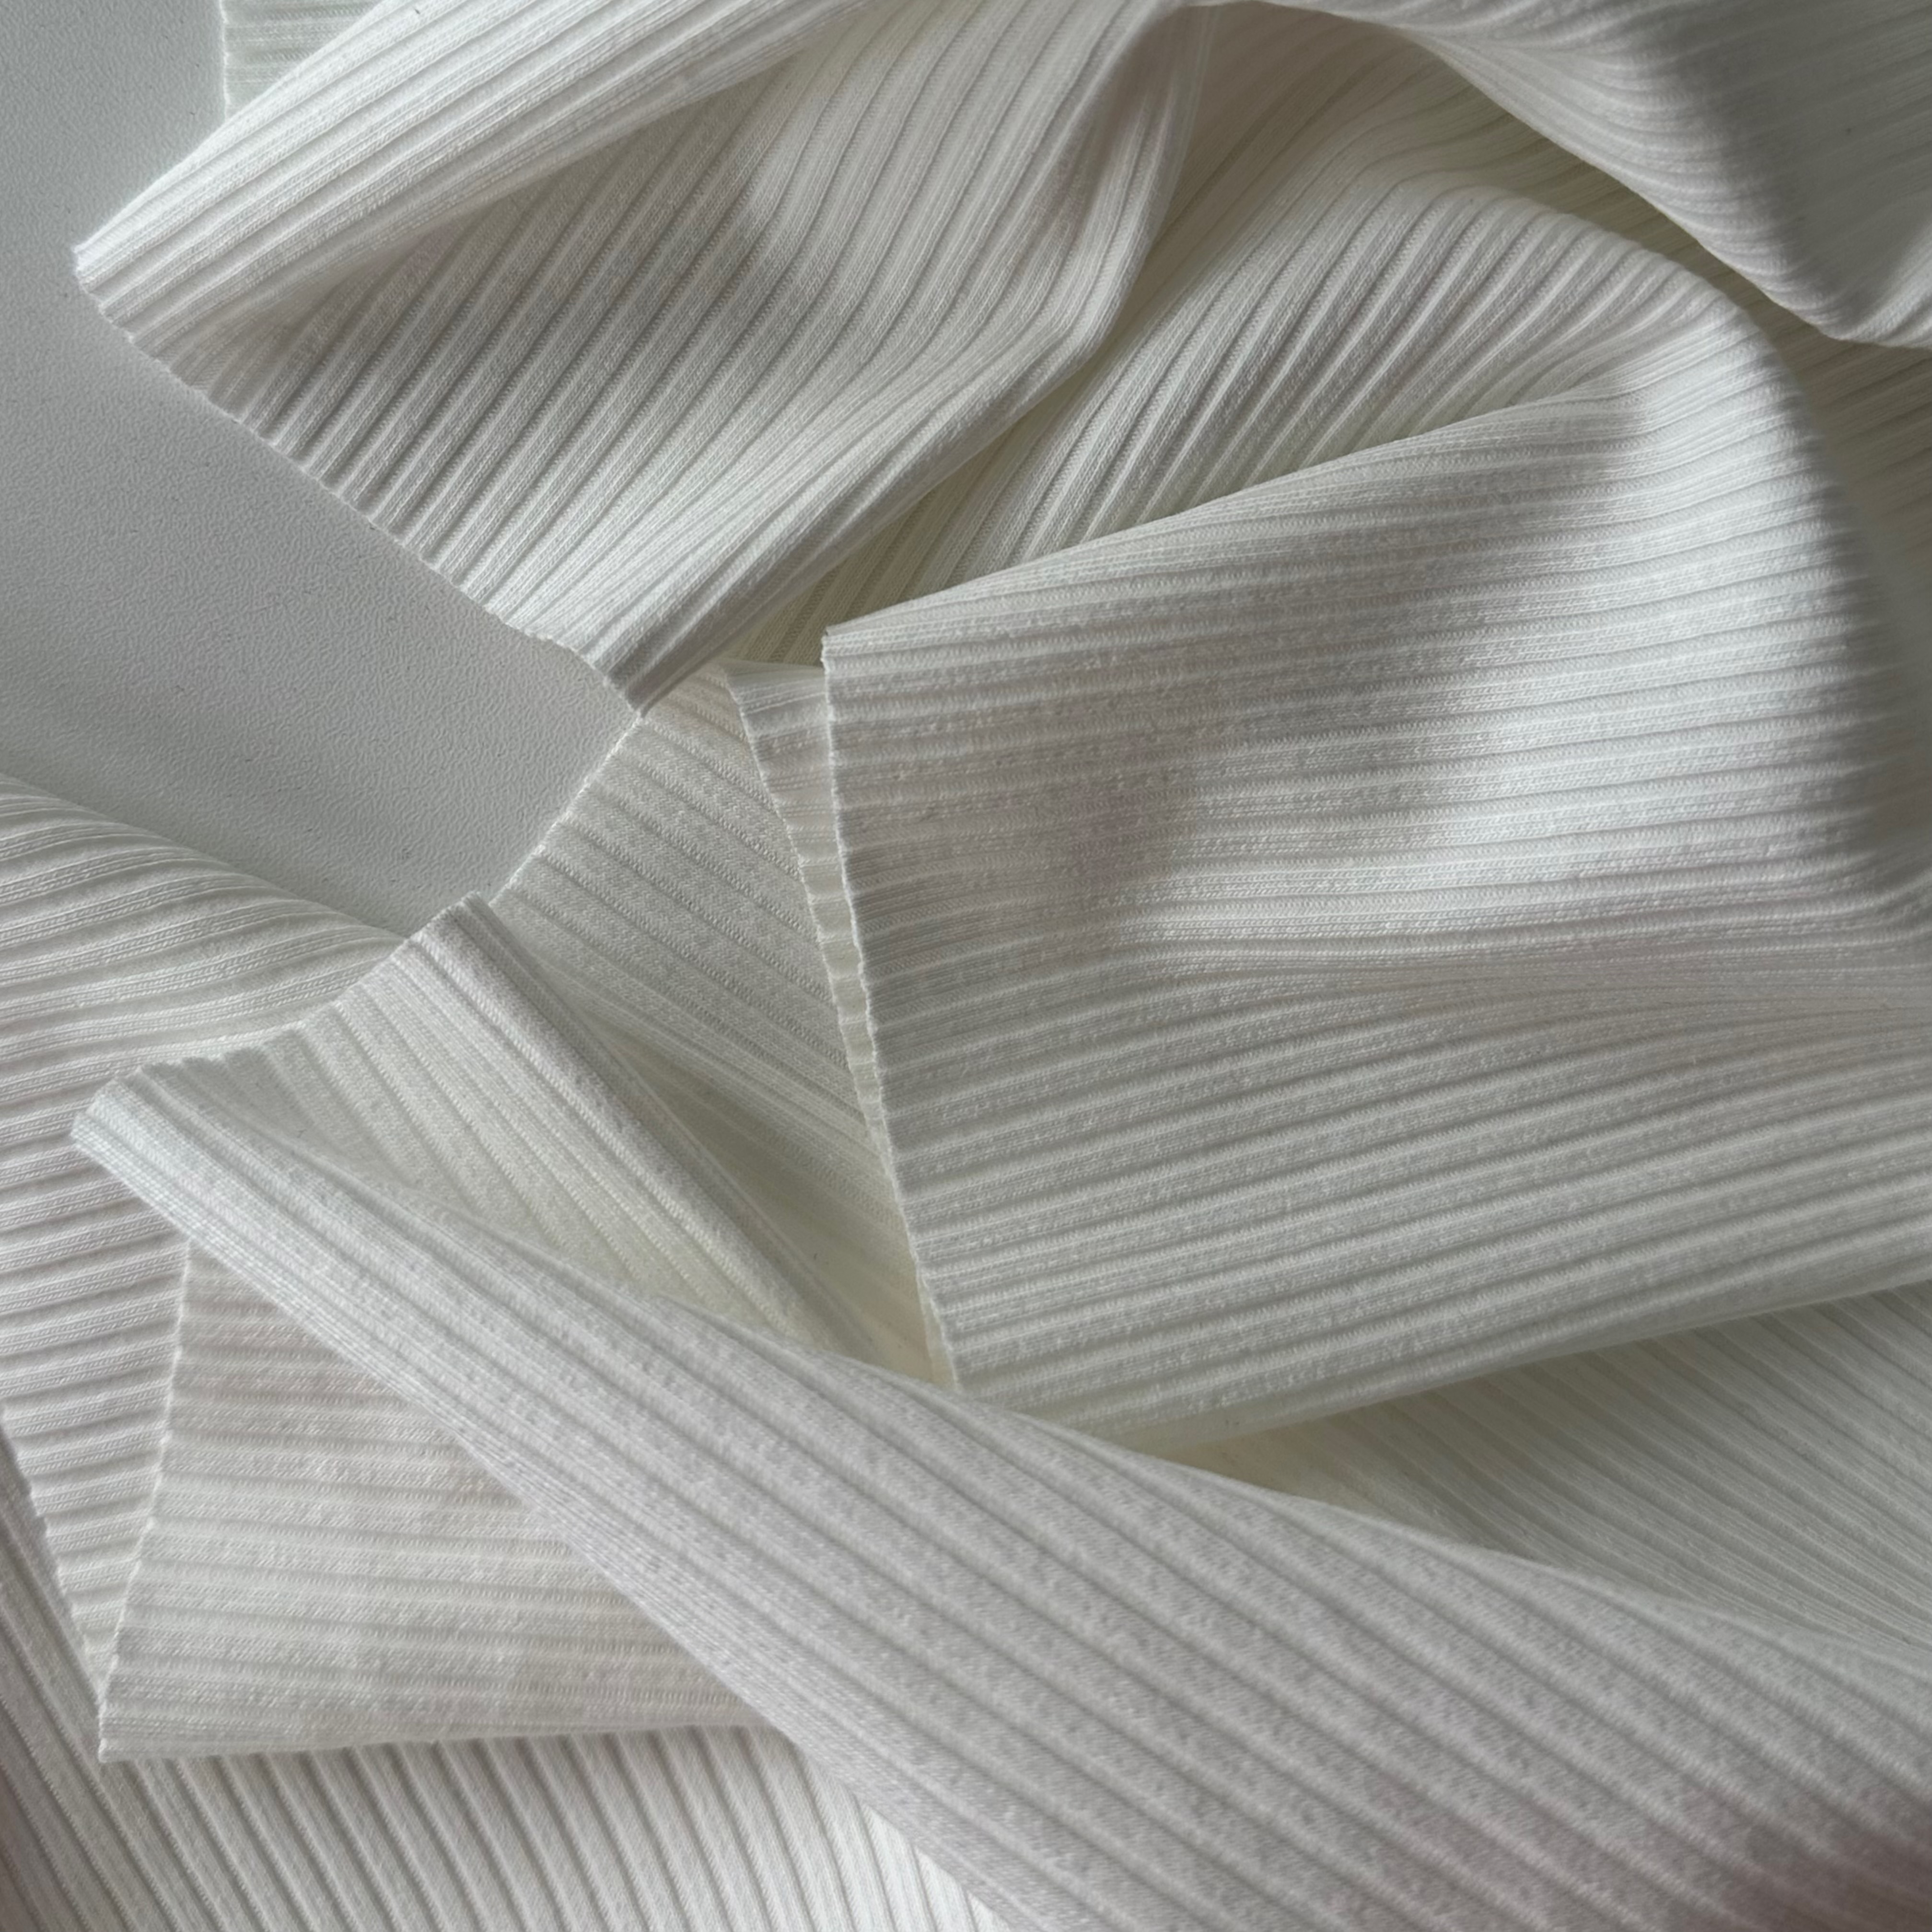 Ткань лапша с лайкрой MamiMa fabric 03456 молочный, отрез 100x121 см